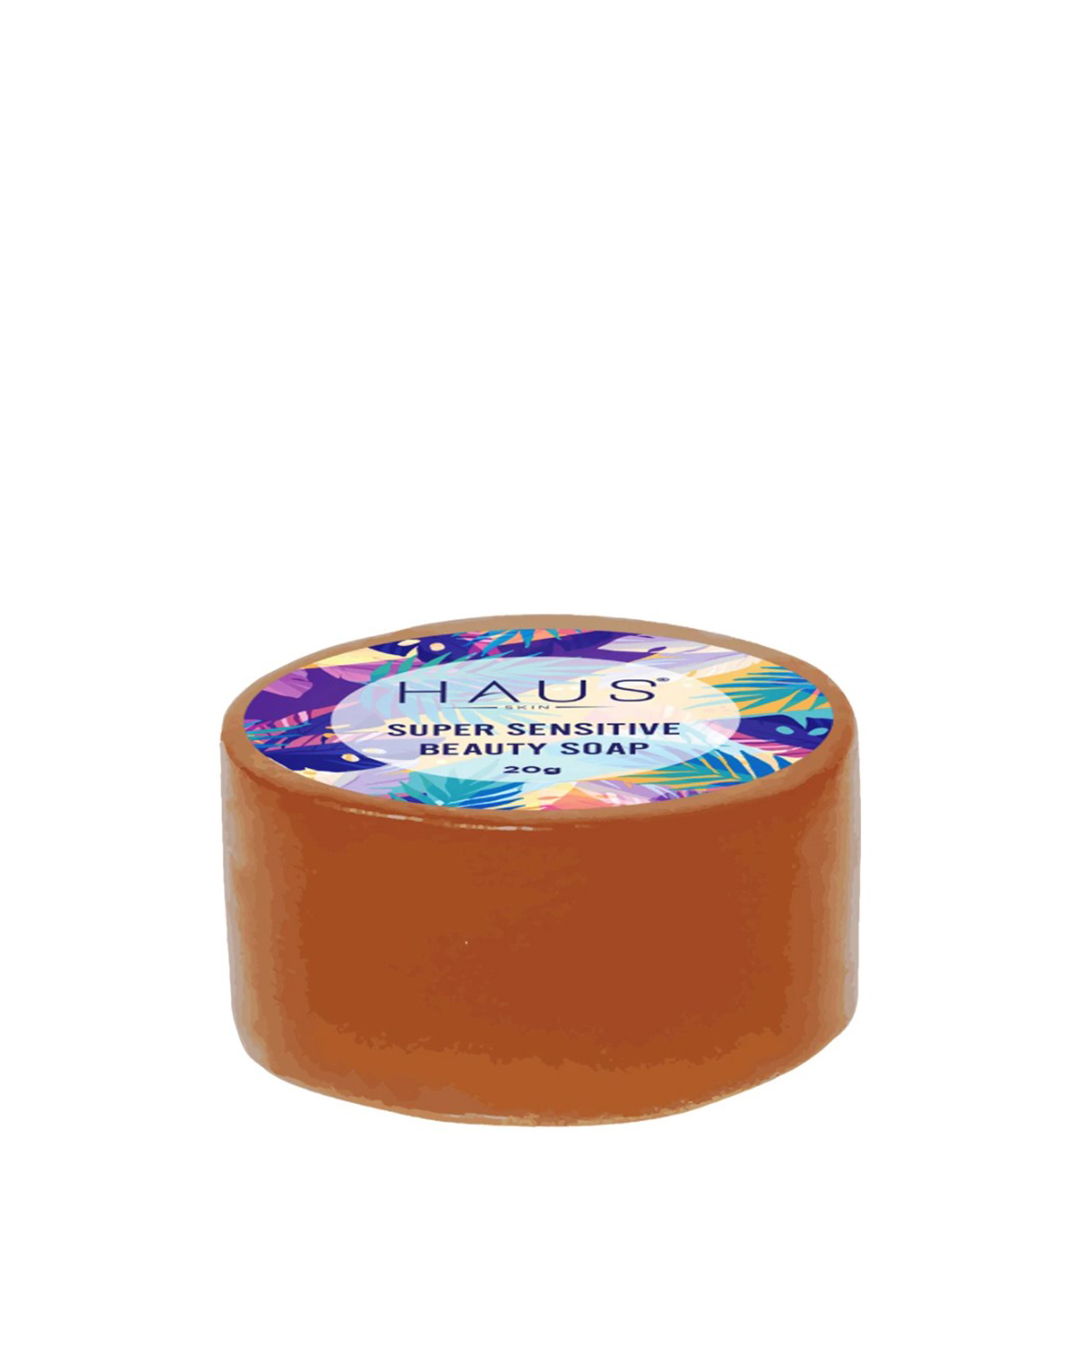 Super Sensitive Beauty Soap 20g-HAUS